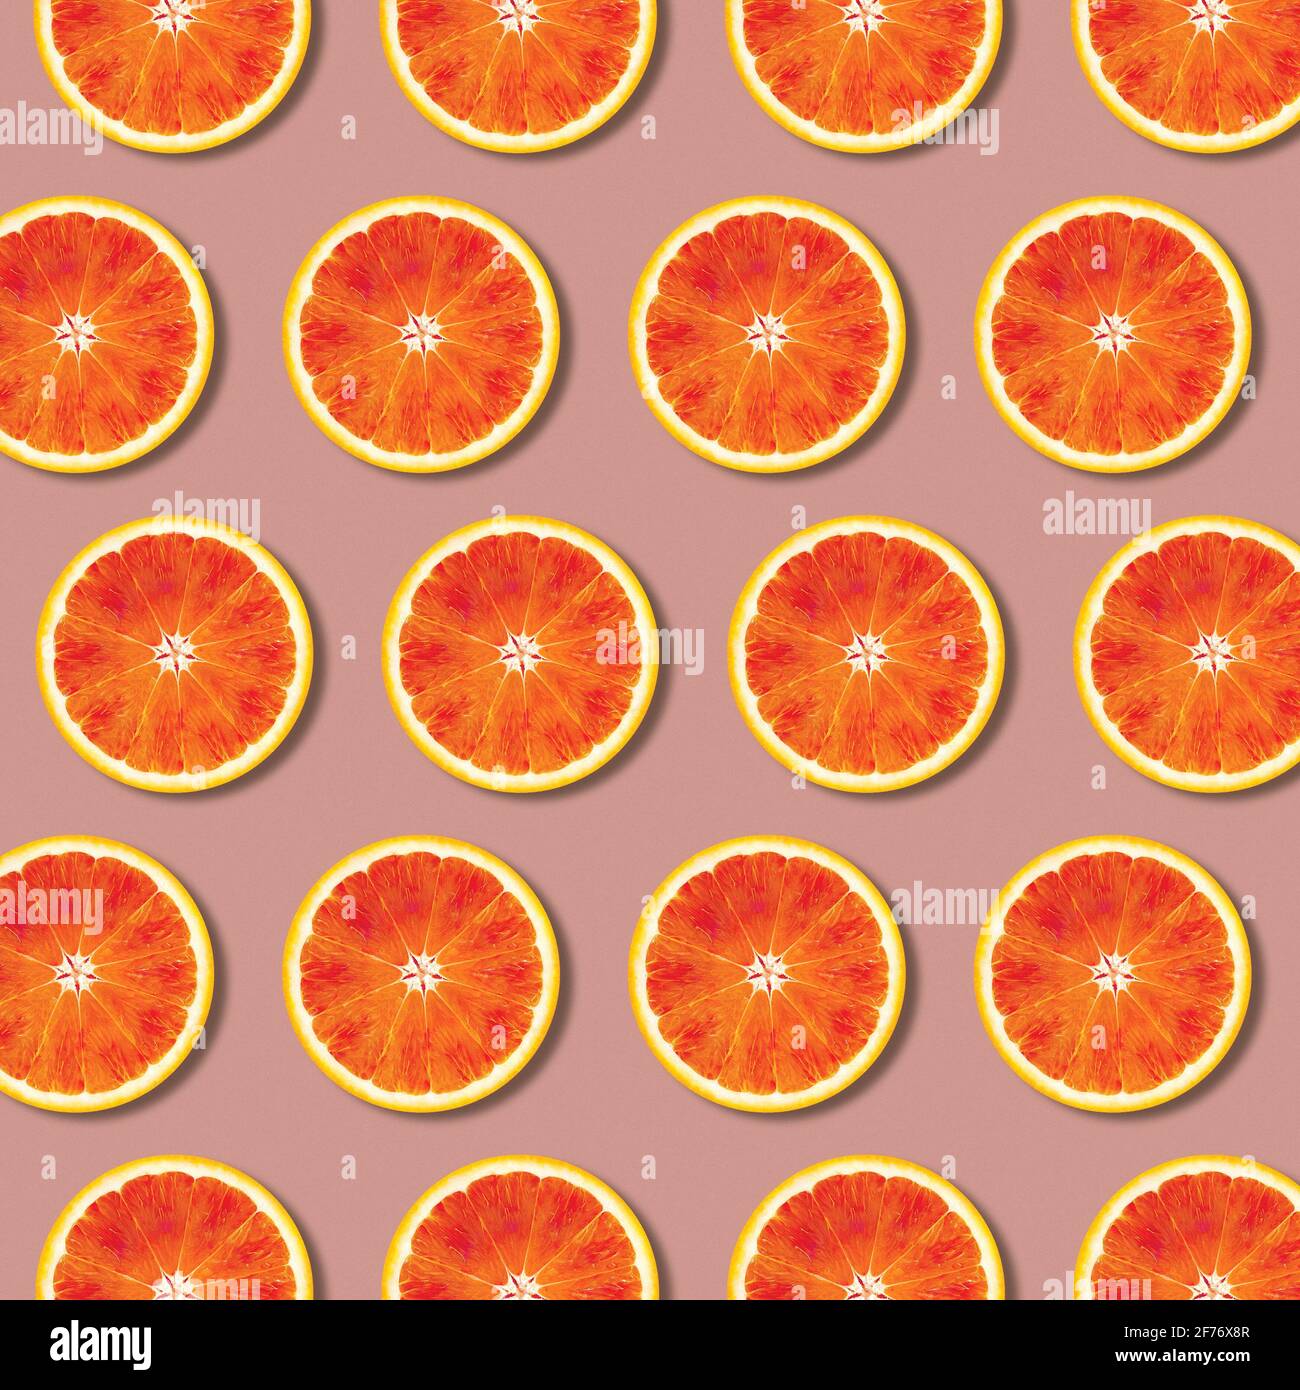 Geometric red orange fruit slices pattern, minimal flat lay food texture Stock Photo